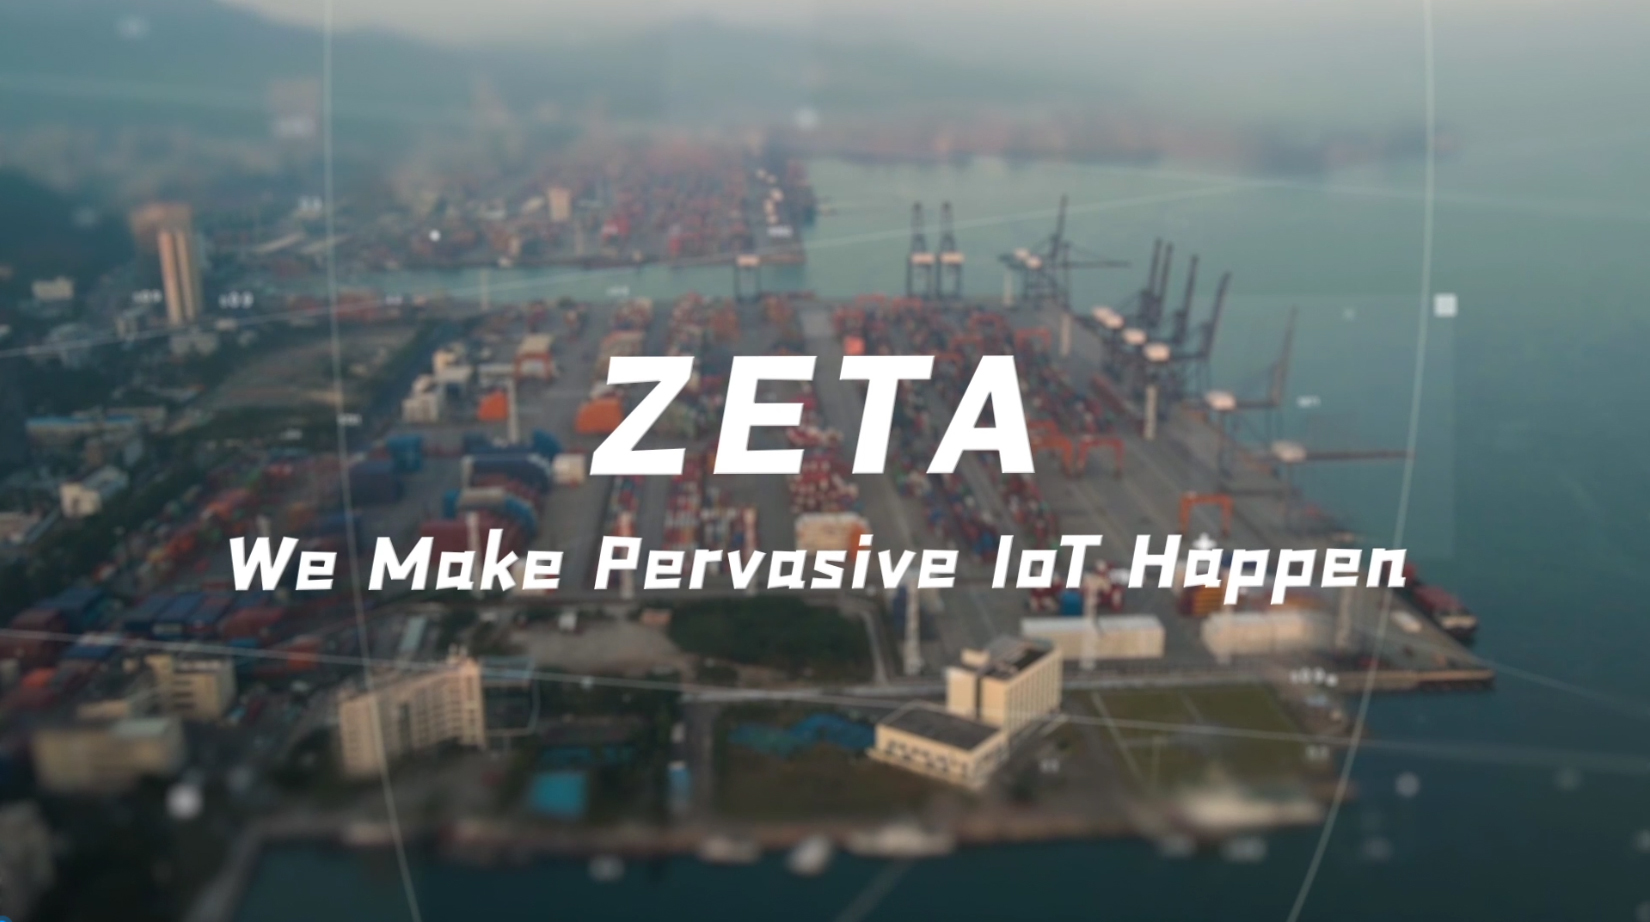 ZETA We Make Pervasive IoT Happen # 物联网# ZETA